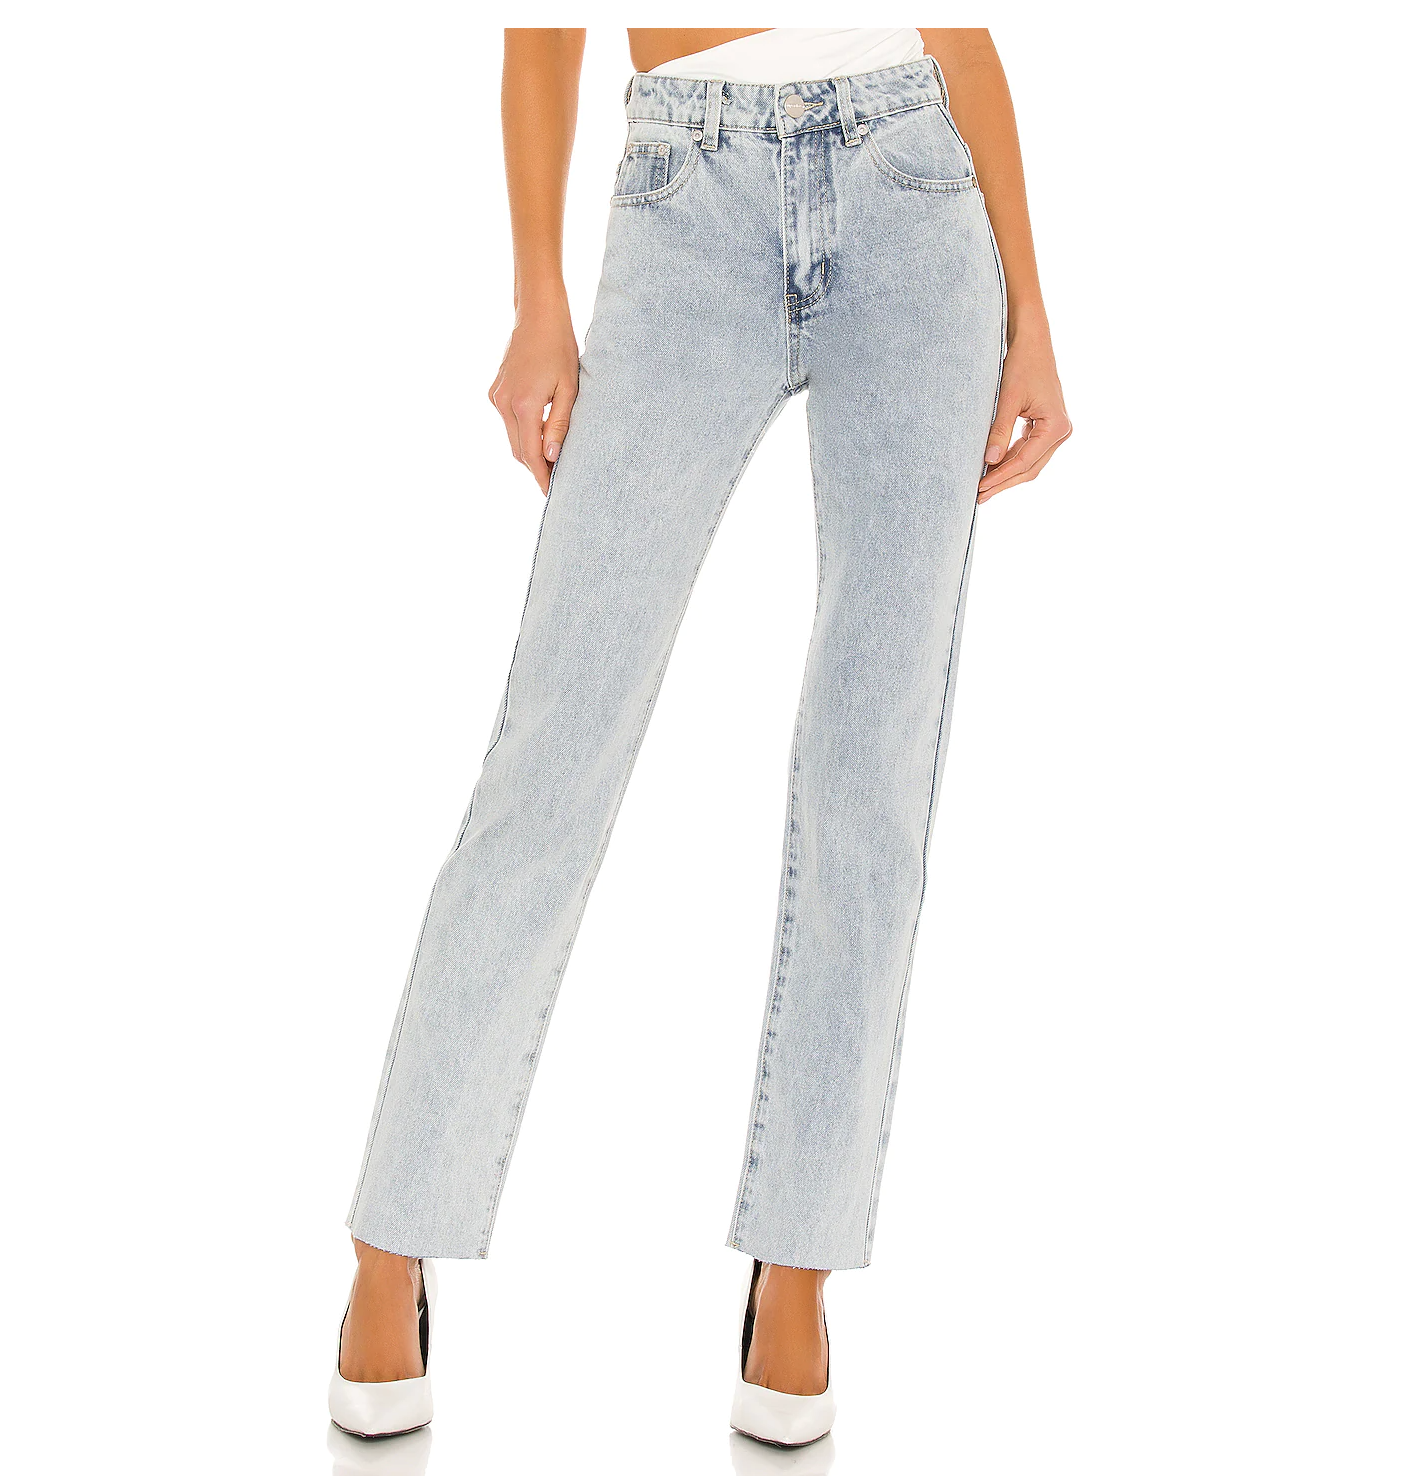 17 Stretch Jeans For Women That Feel Like Leggings - Starting at $16 ...